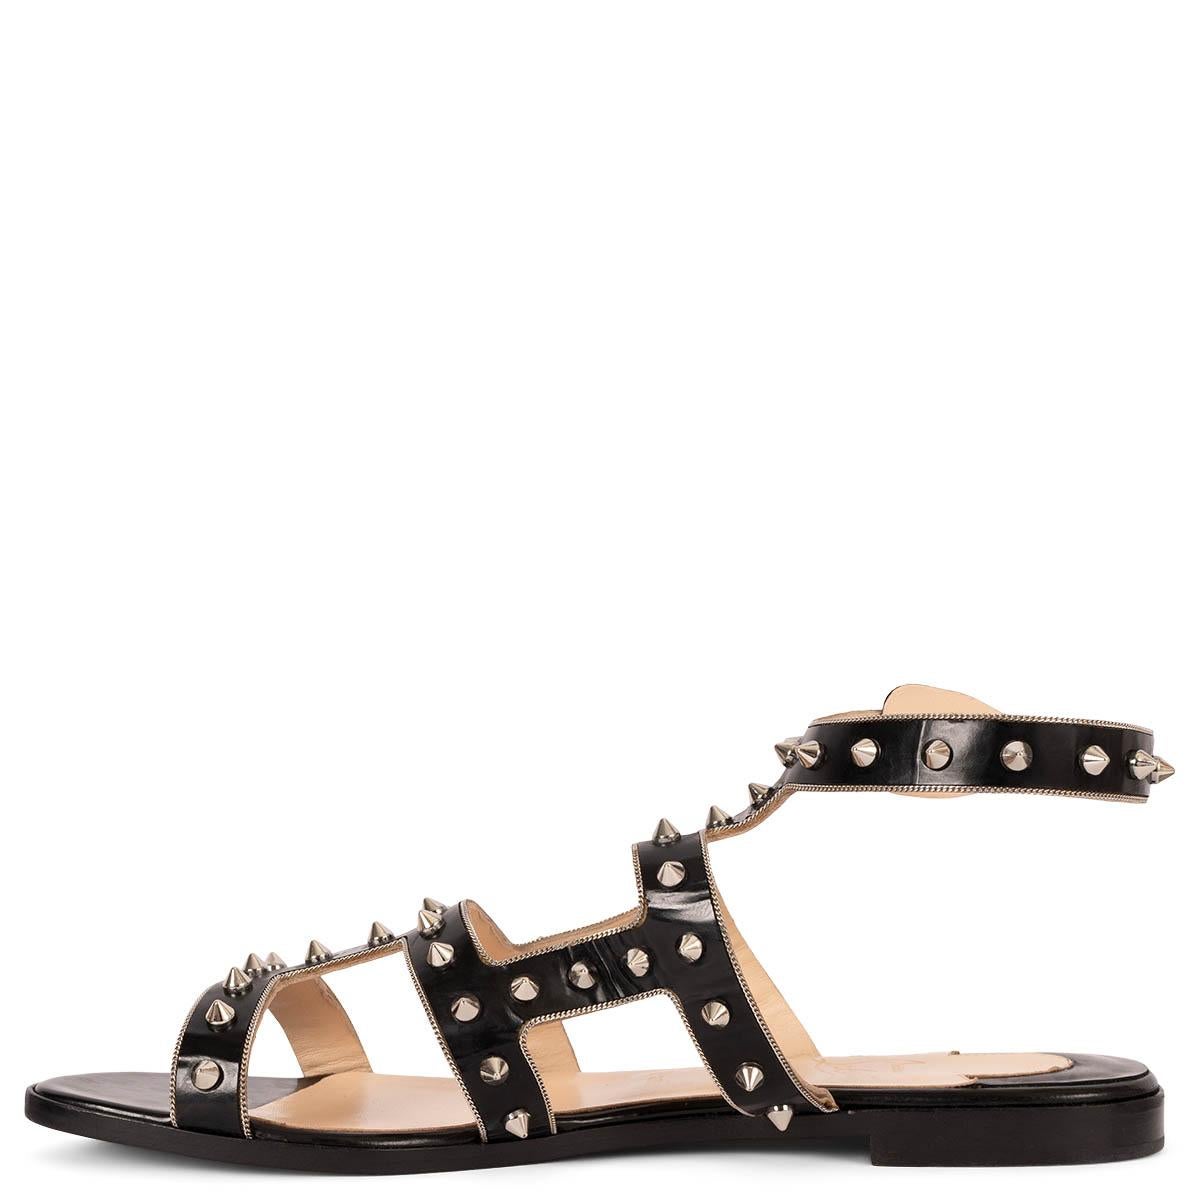 CHRISTIAN LOUBOUTIN Gladiator-Sandalen aus schwarzem Leder SEXISTRAPI, Schuhe 39, Größe 38,5 Damen im Angebot